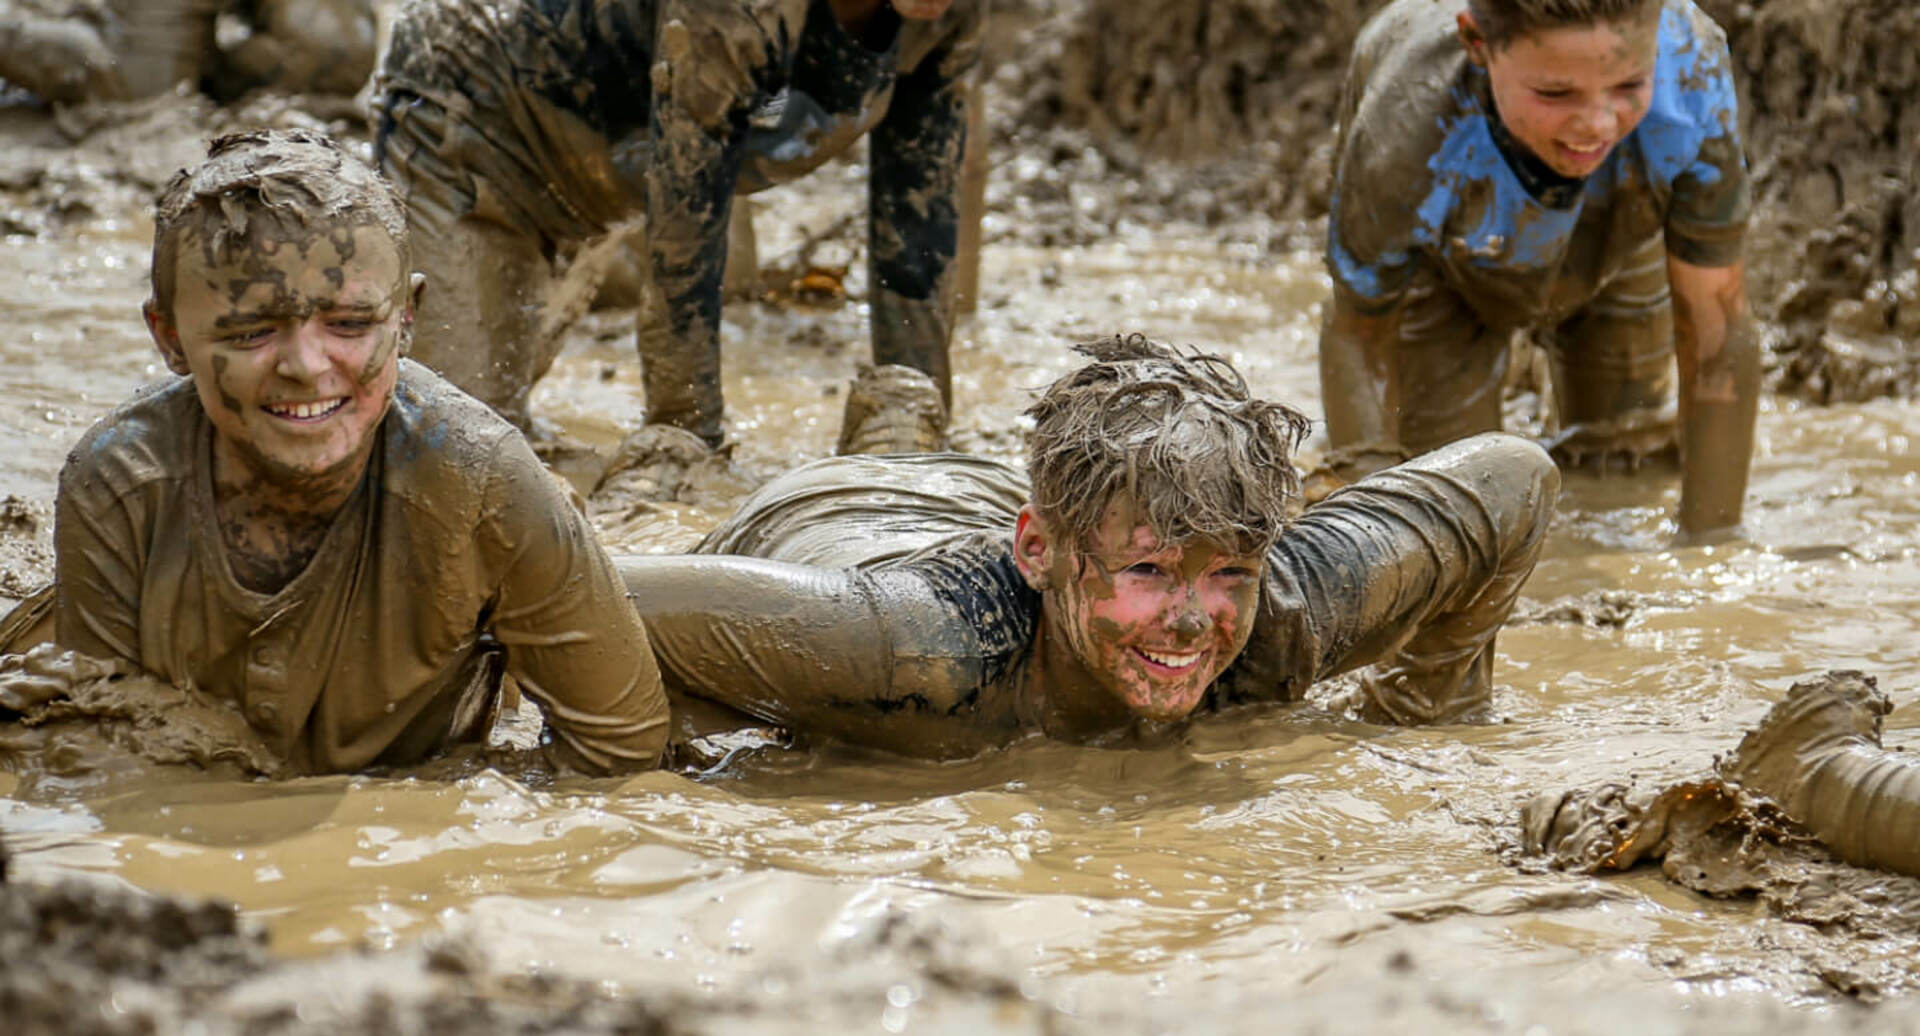 Mud run in action